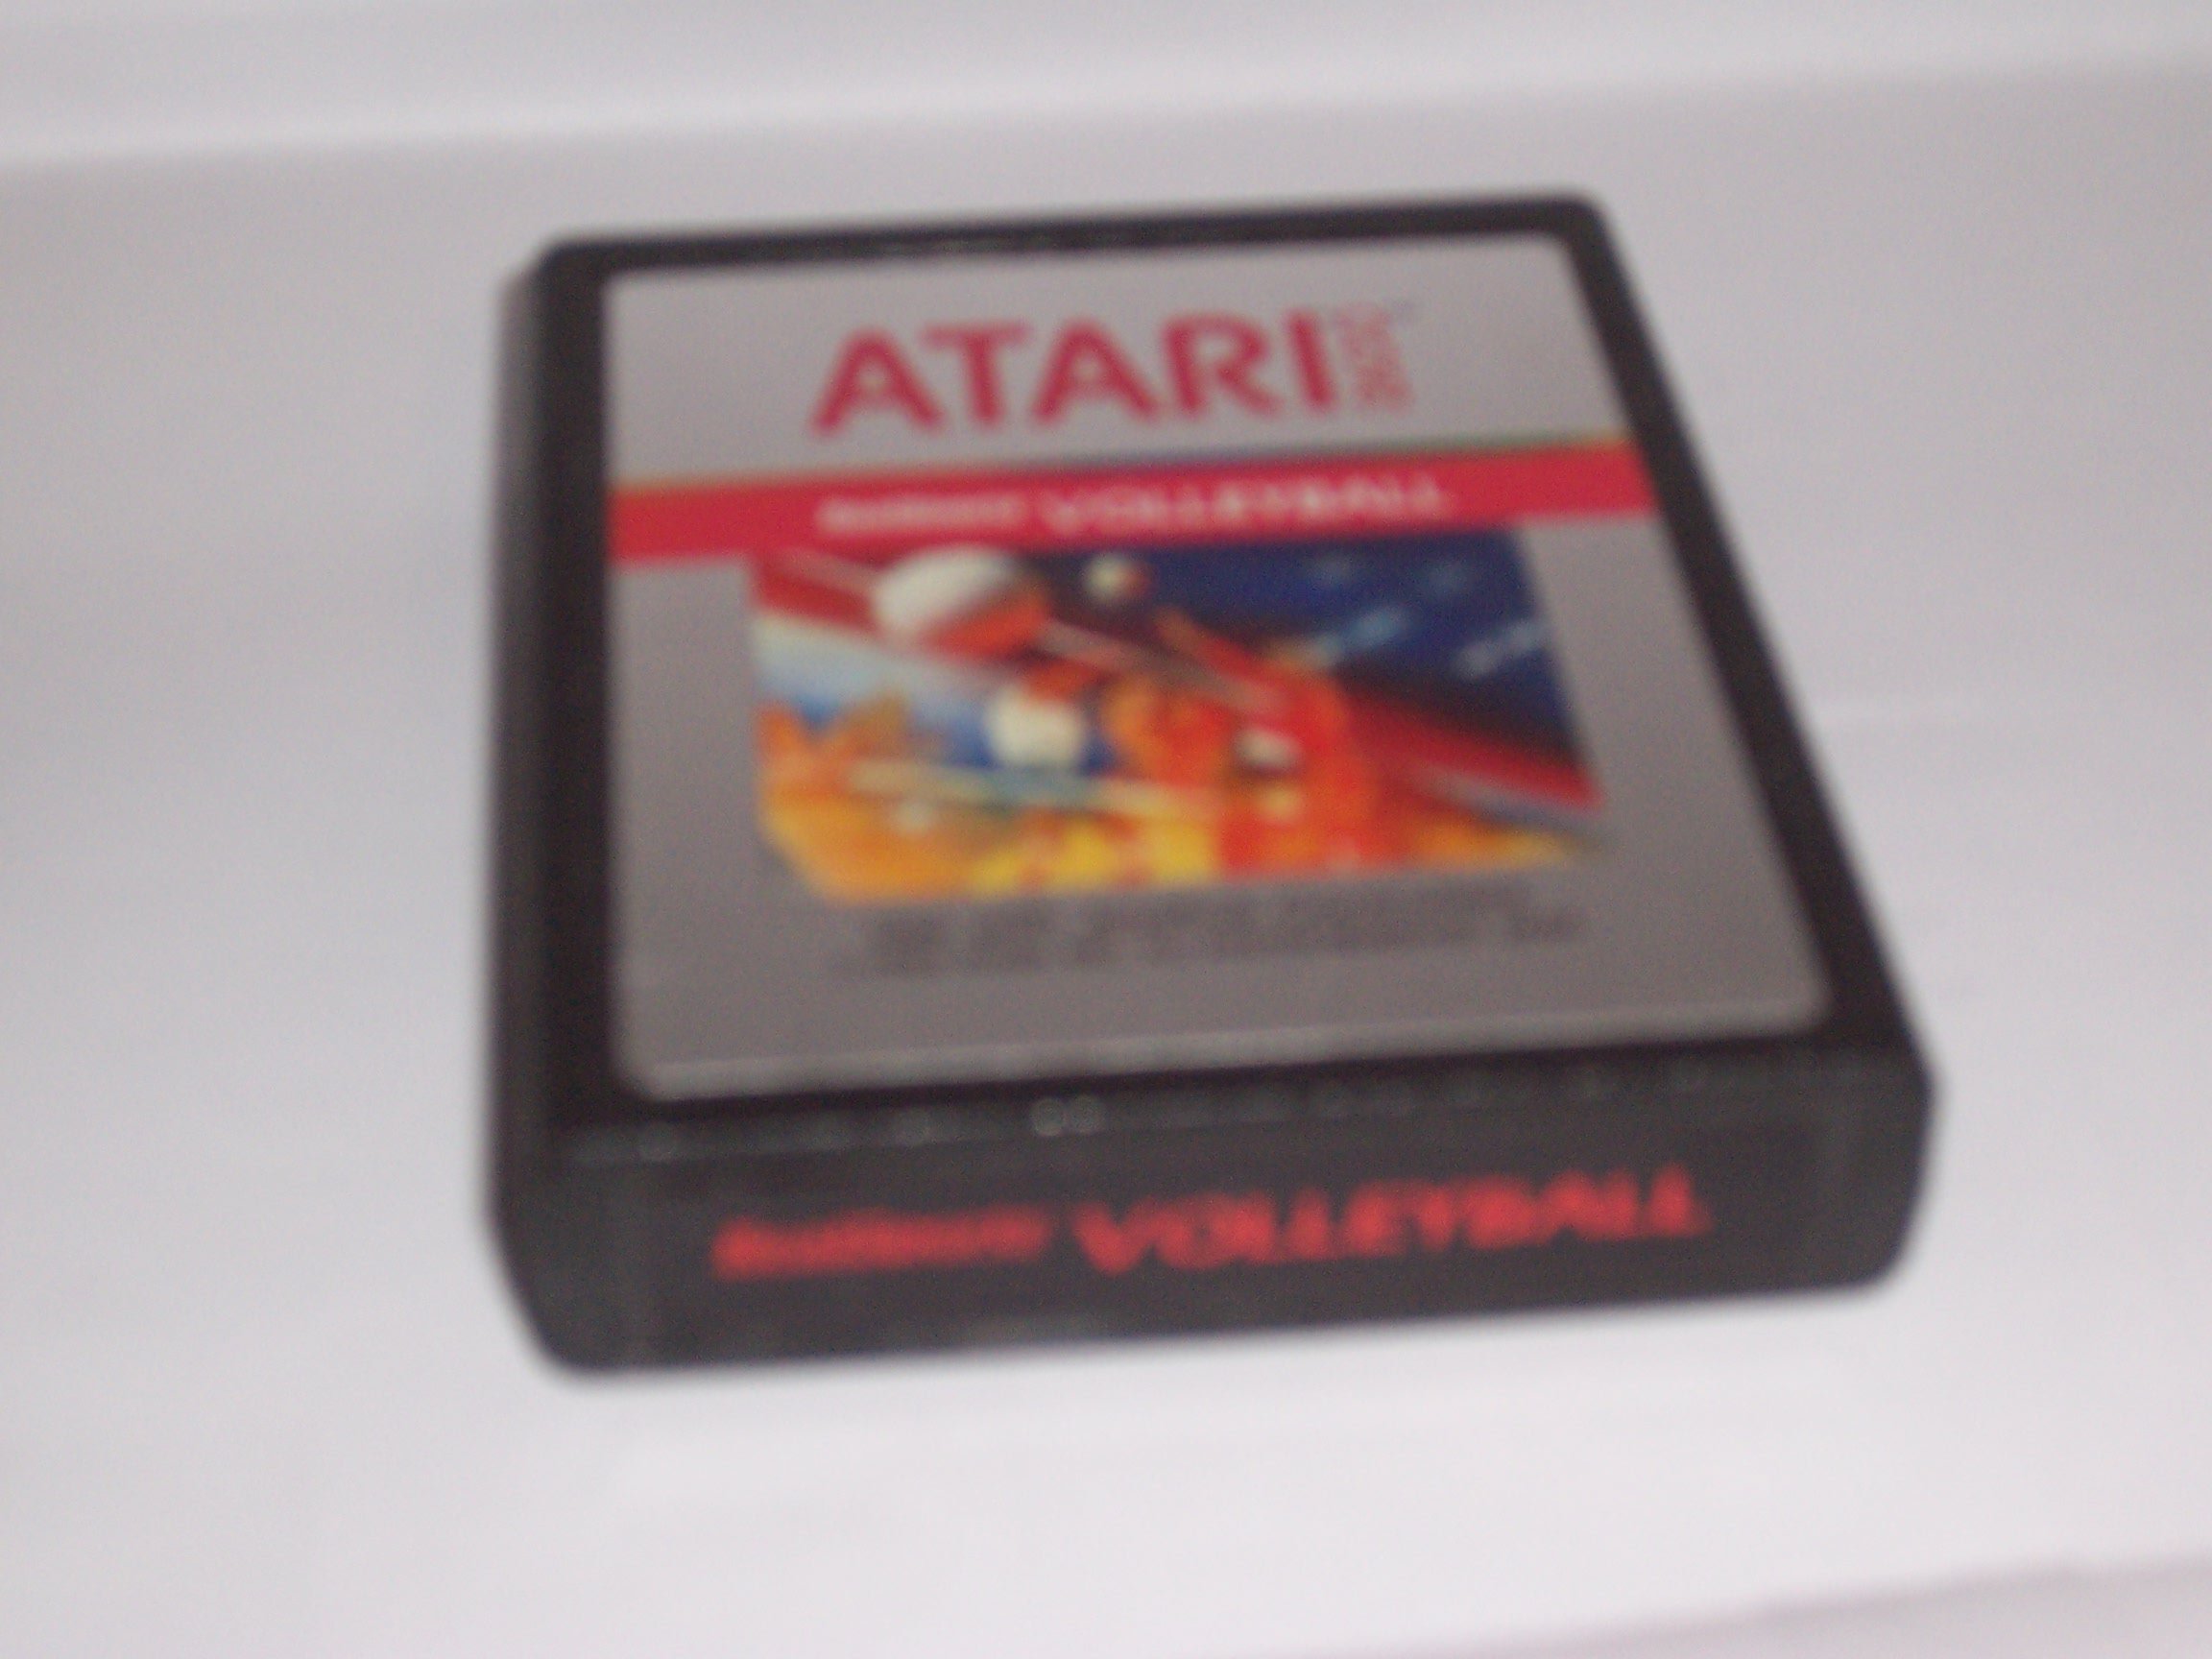 Atari 2600 Game Cartridge - Real Sports Volleyball